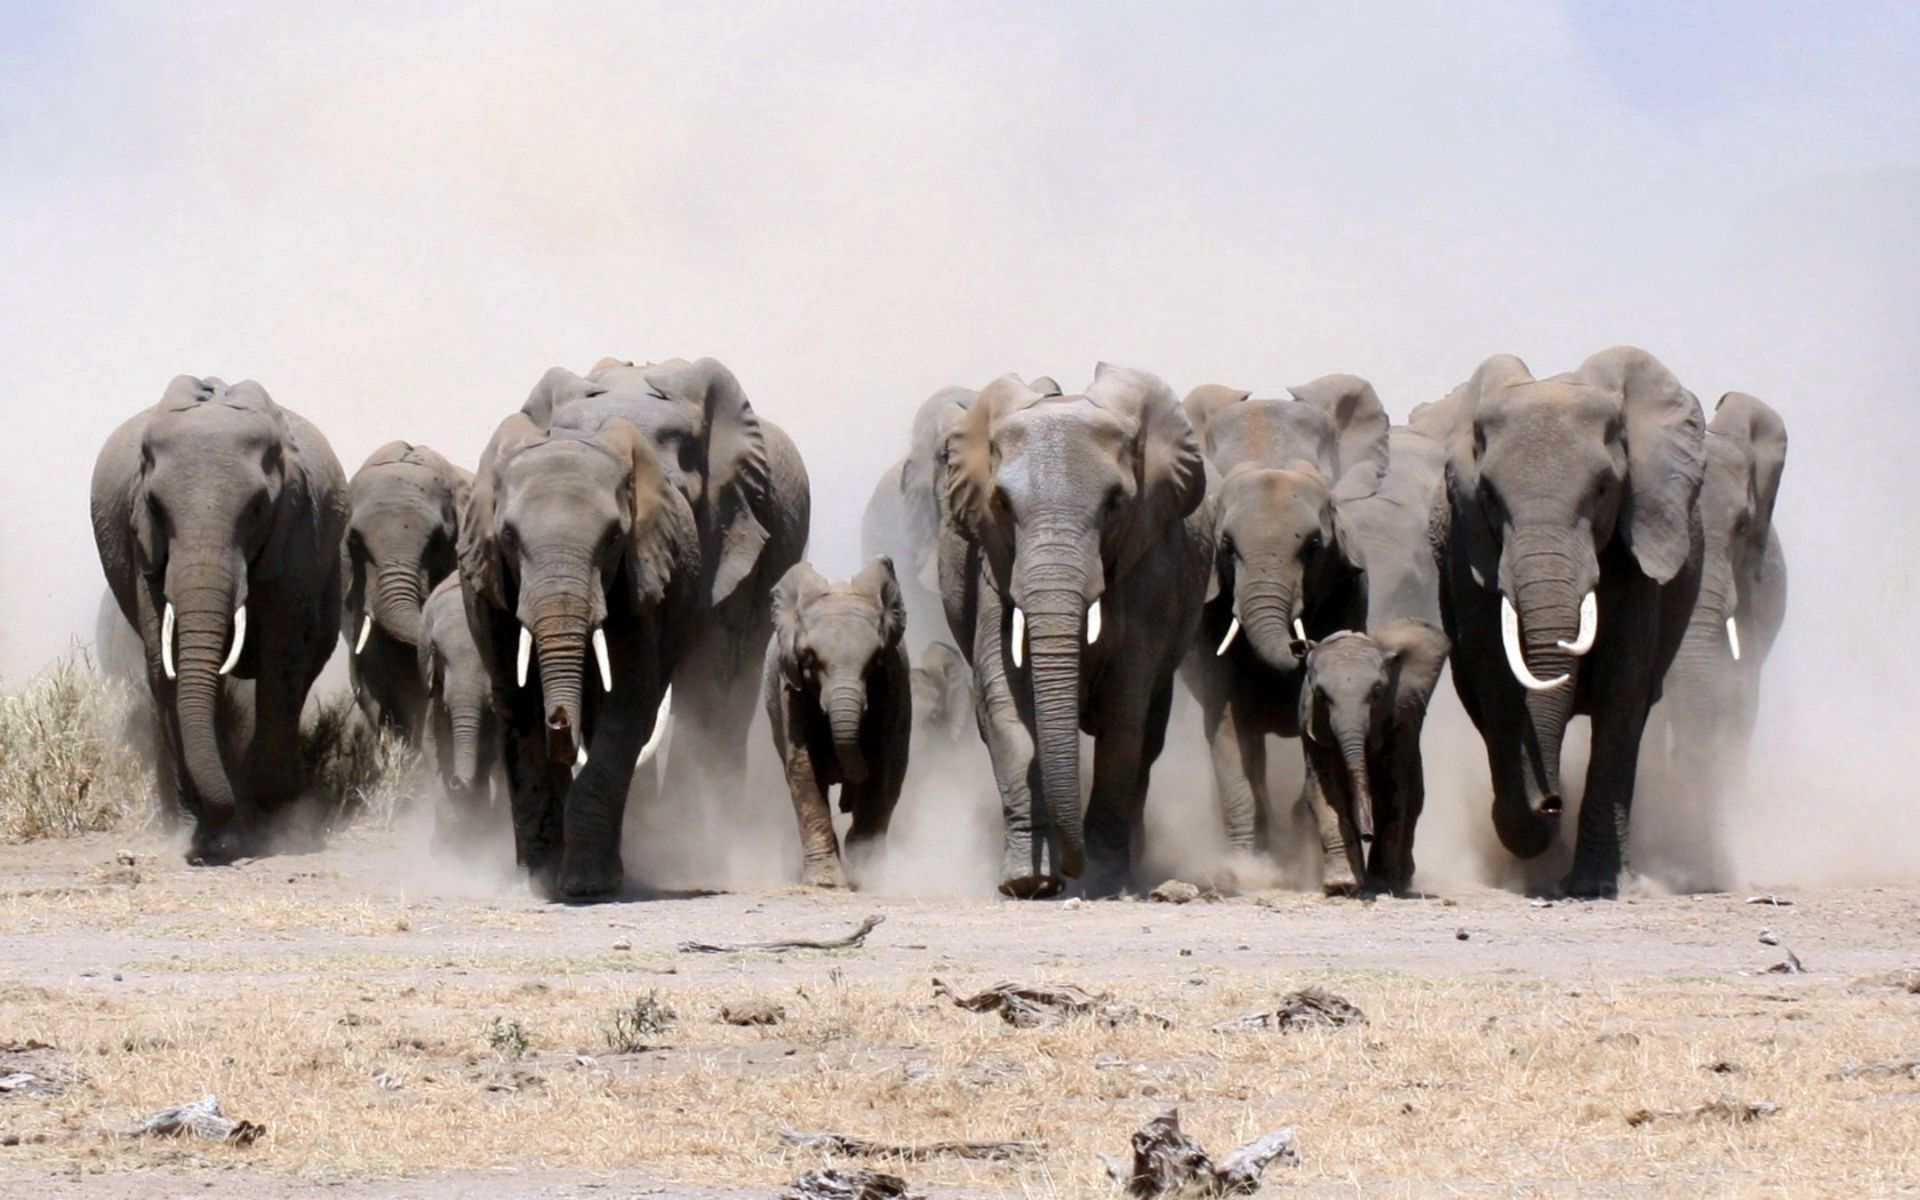 elephants, run away, lot, animals, sand, dust, run